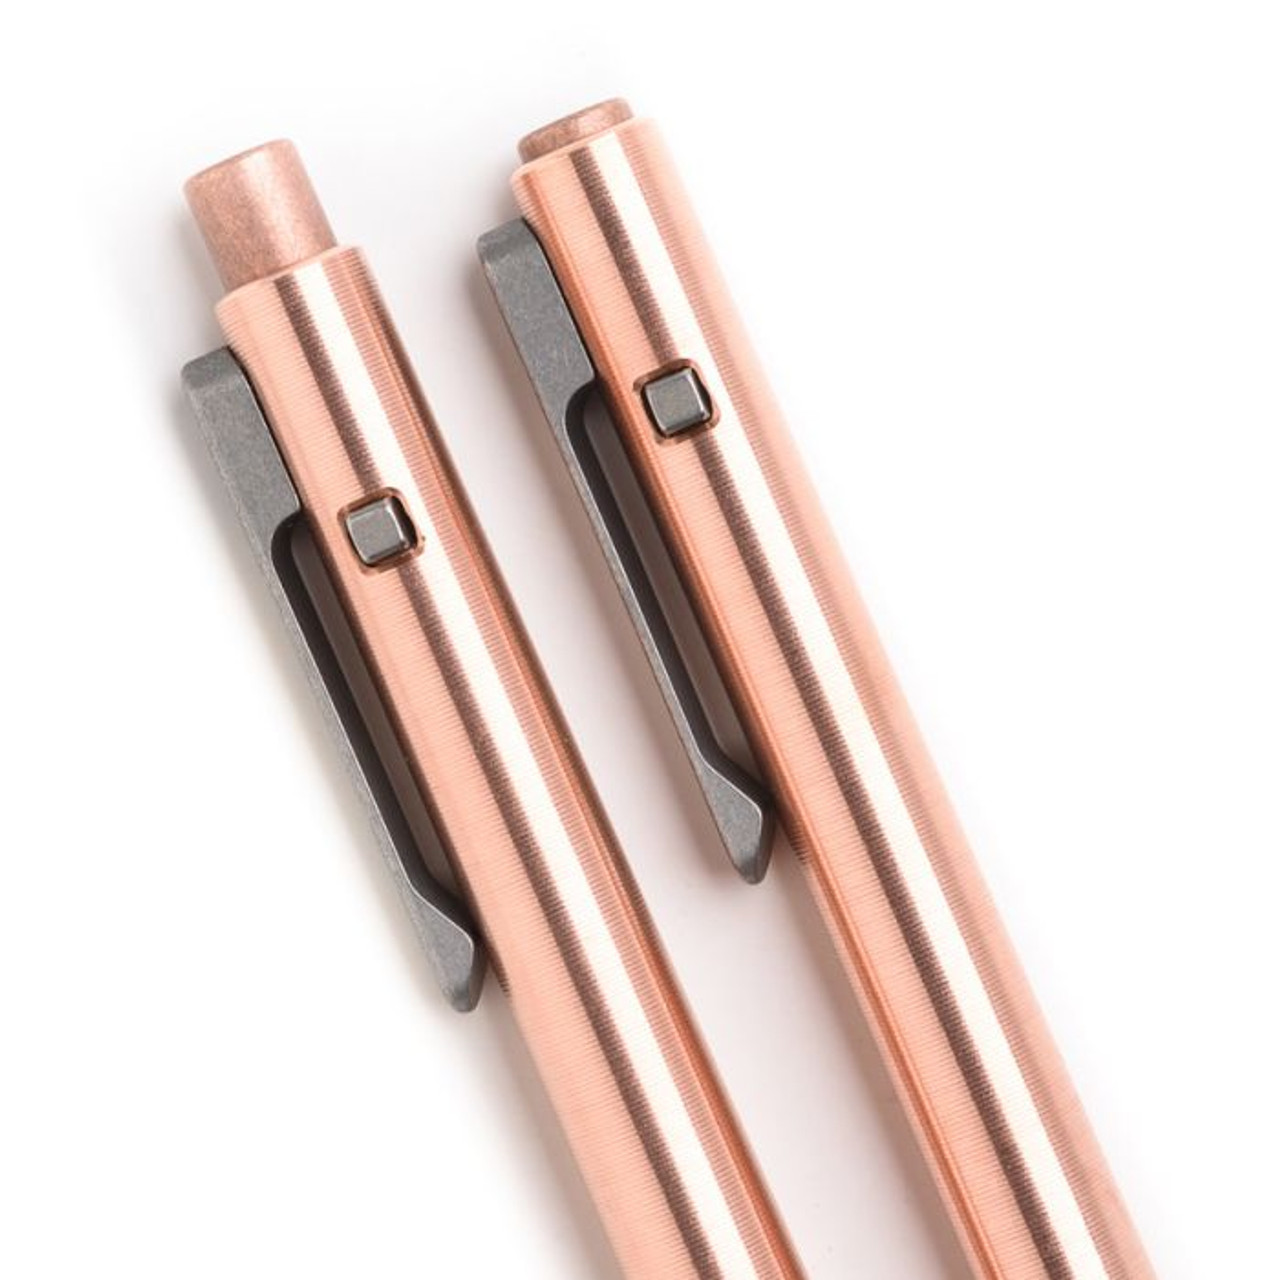 Tactile Turn Standard Side Click Pen (TTRSC1C) Satin Copper Body, Stonewashed Titanium Click Button and Pocket Clip